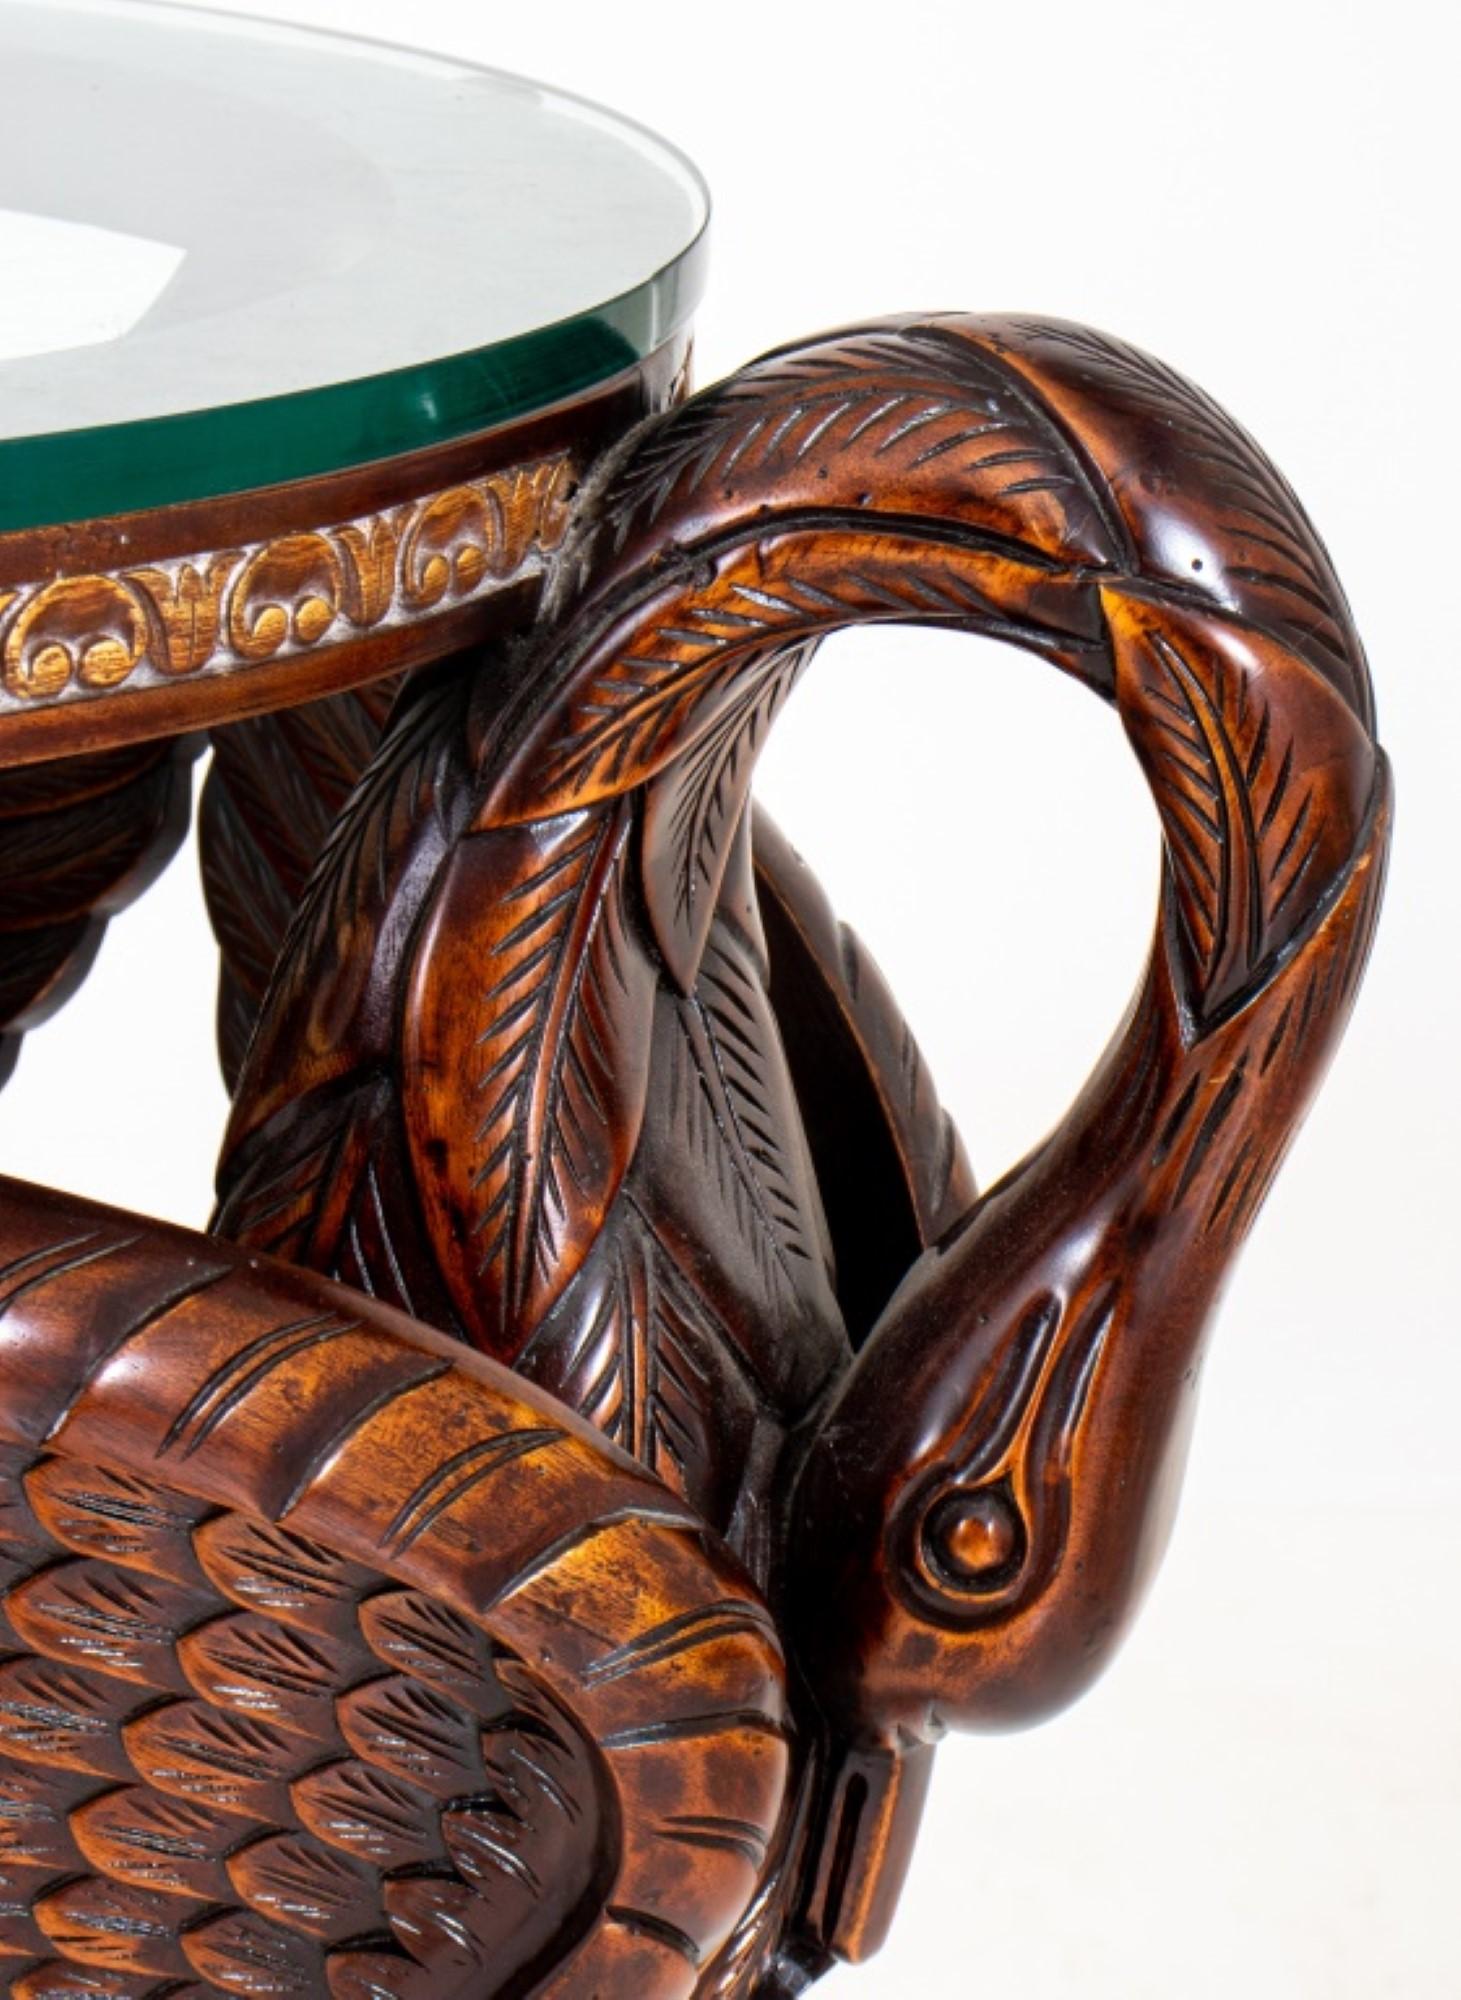 20th Century Art Nouveau Revival Swan Carved Mahogany Pedestal For Sale